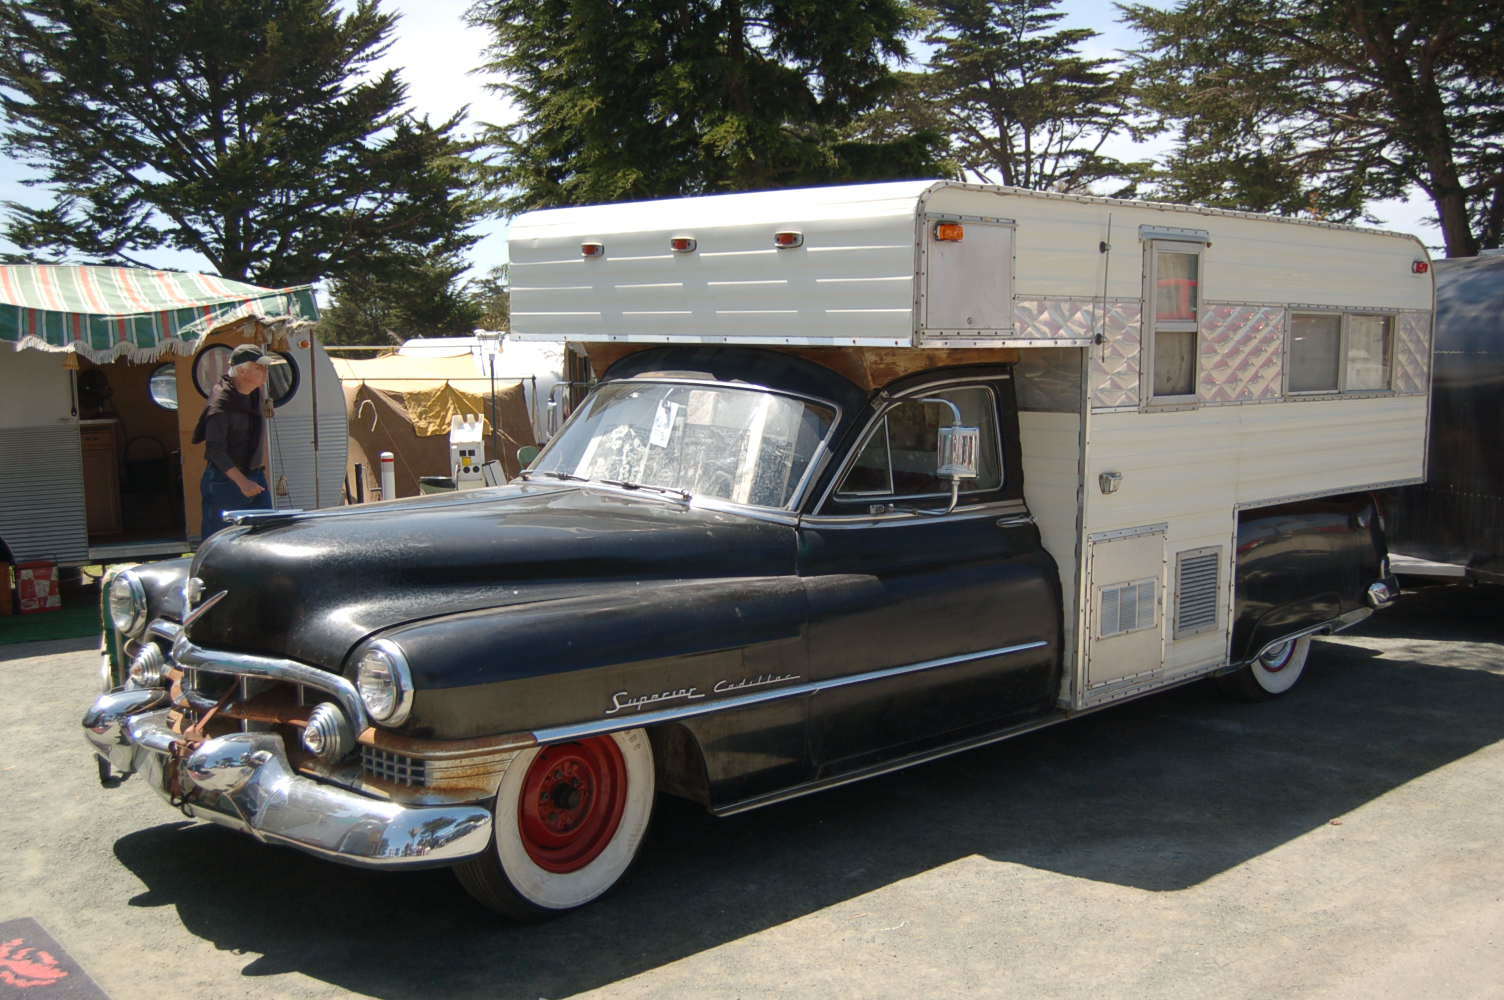 Motorhomes based on classic Cadillacs - Longpost, Retro car, Retro, Camper, House on wheels, Cadillac